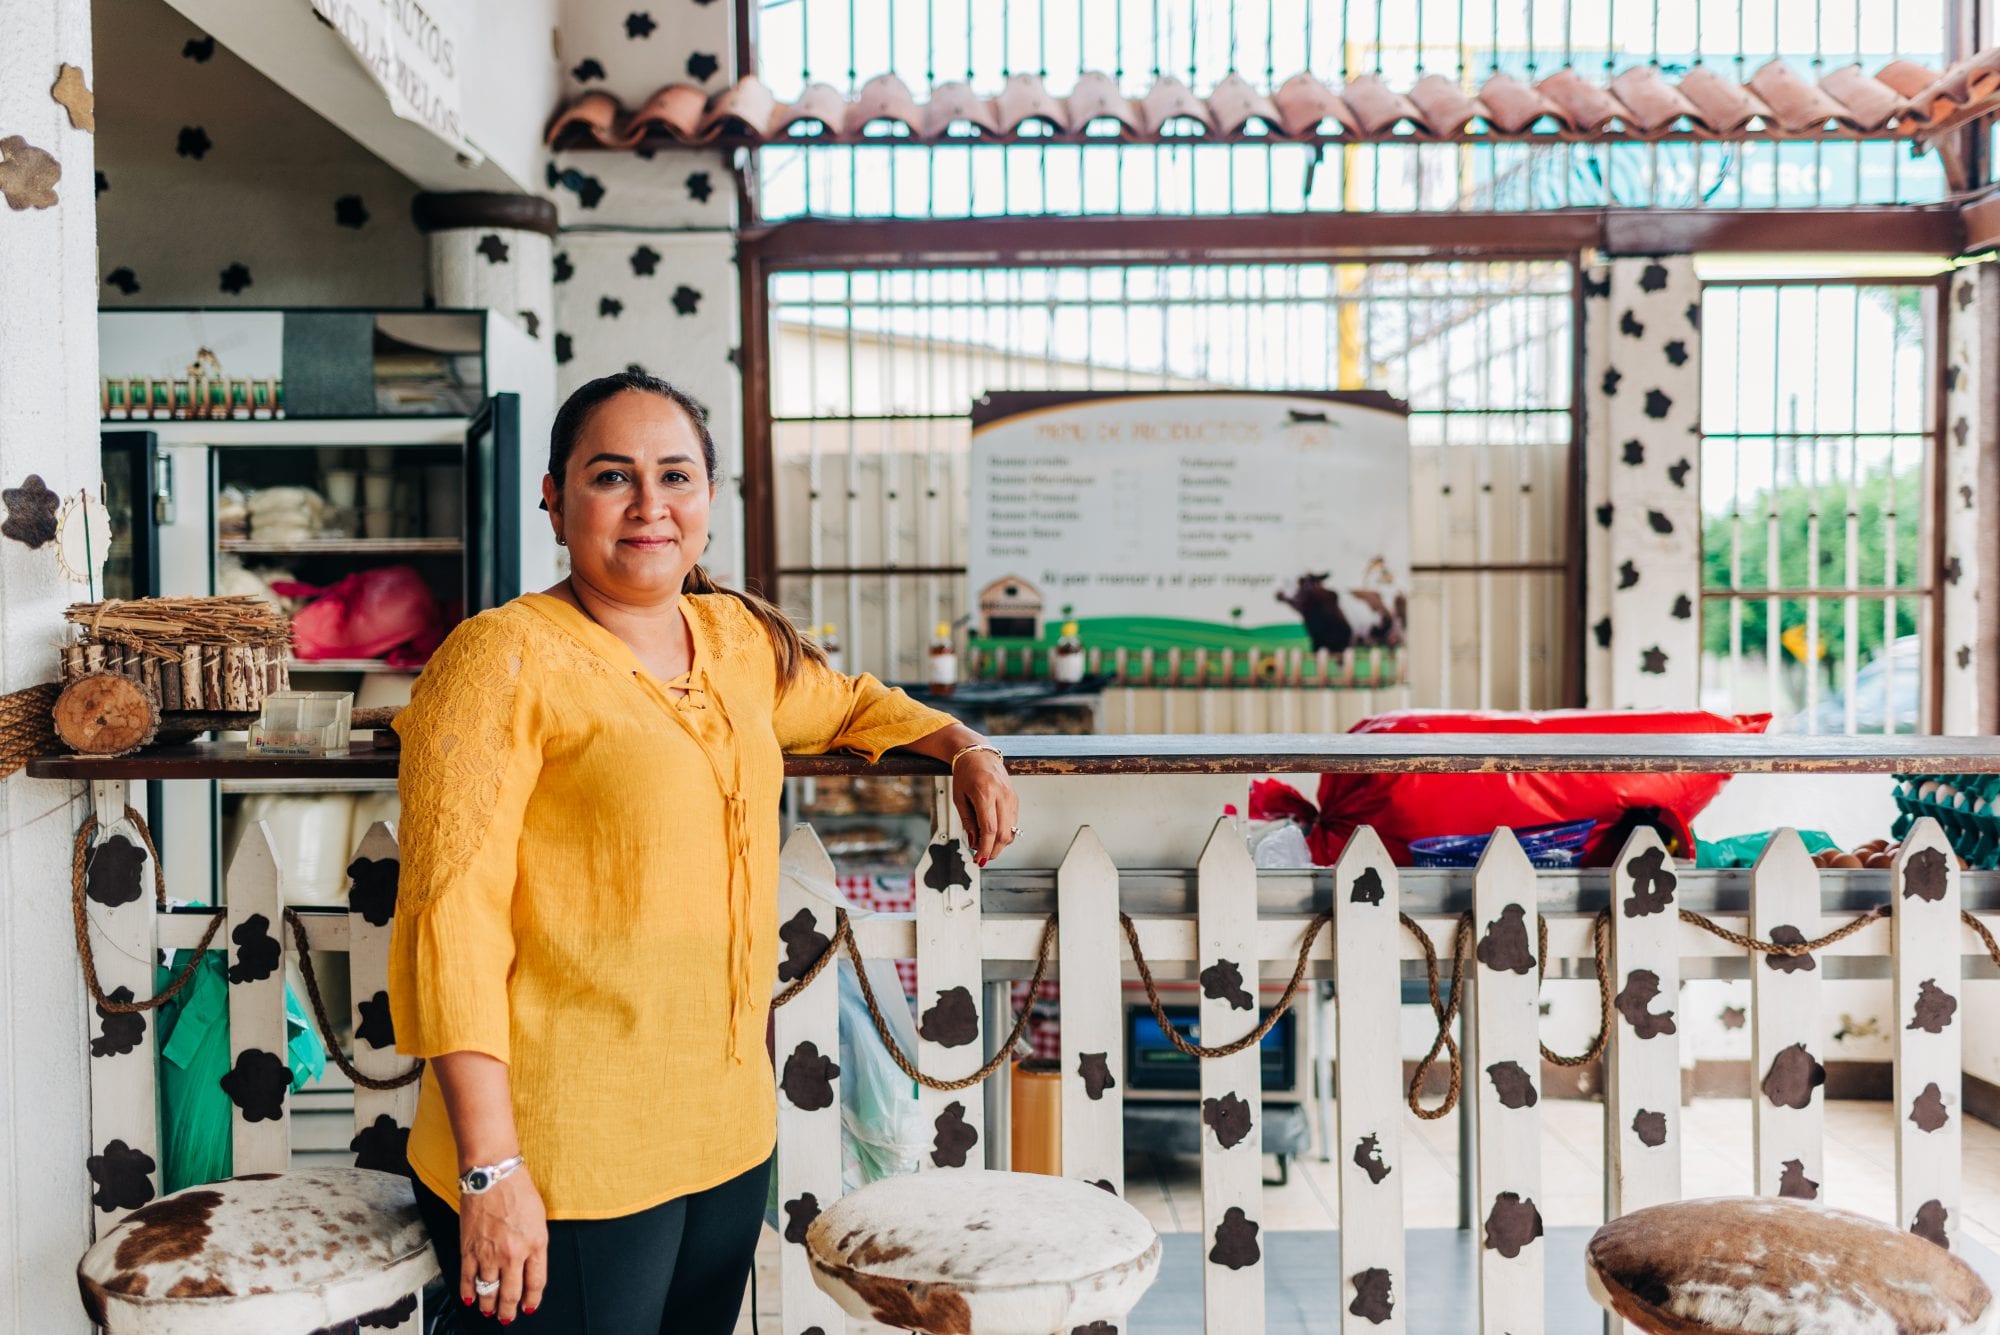 Social impact entrepreneur, Idalia Medina, stands in her shop in Managua, Nicaragua